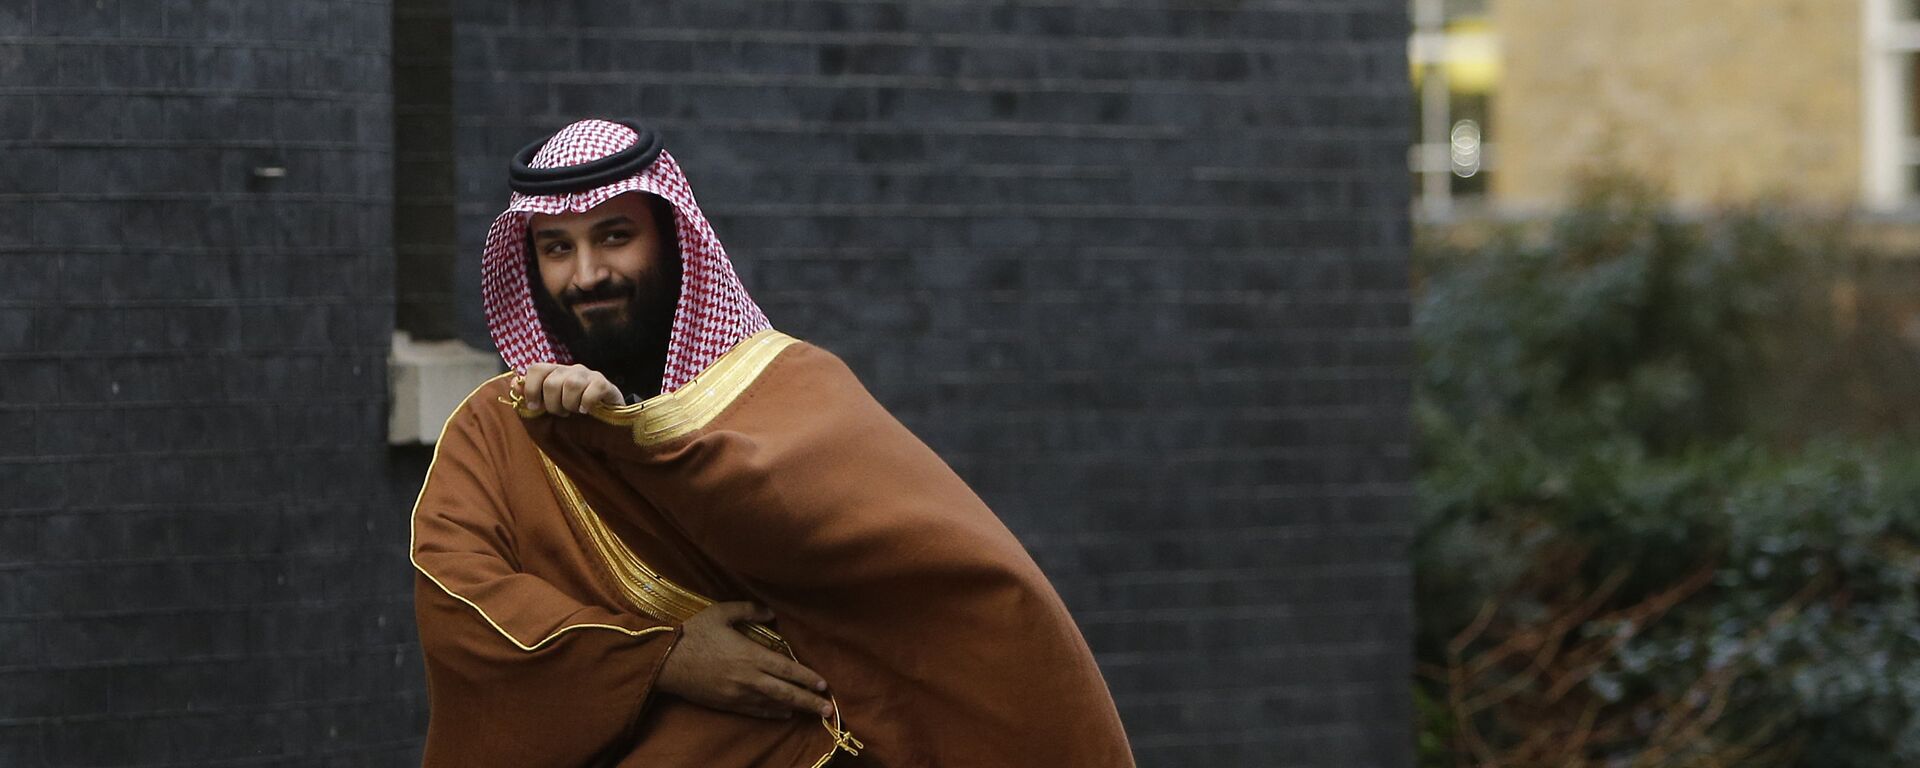 Mohamed bin Salman, príncipe heredero de Arabia Saudí - Sputnik Mundo, 1920, 02.03.2021